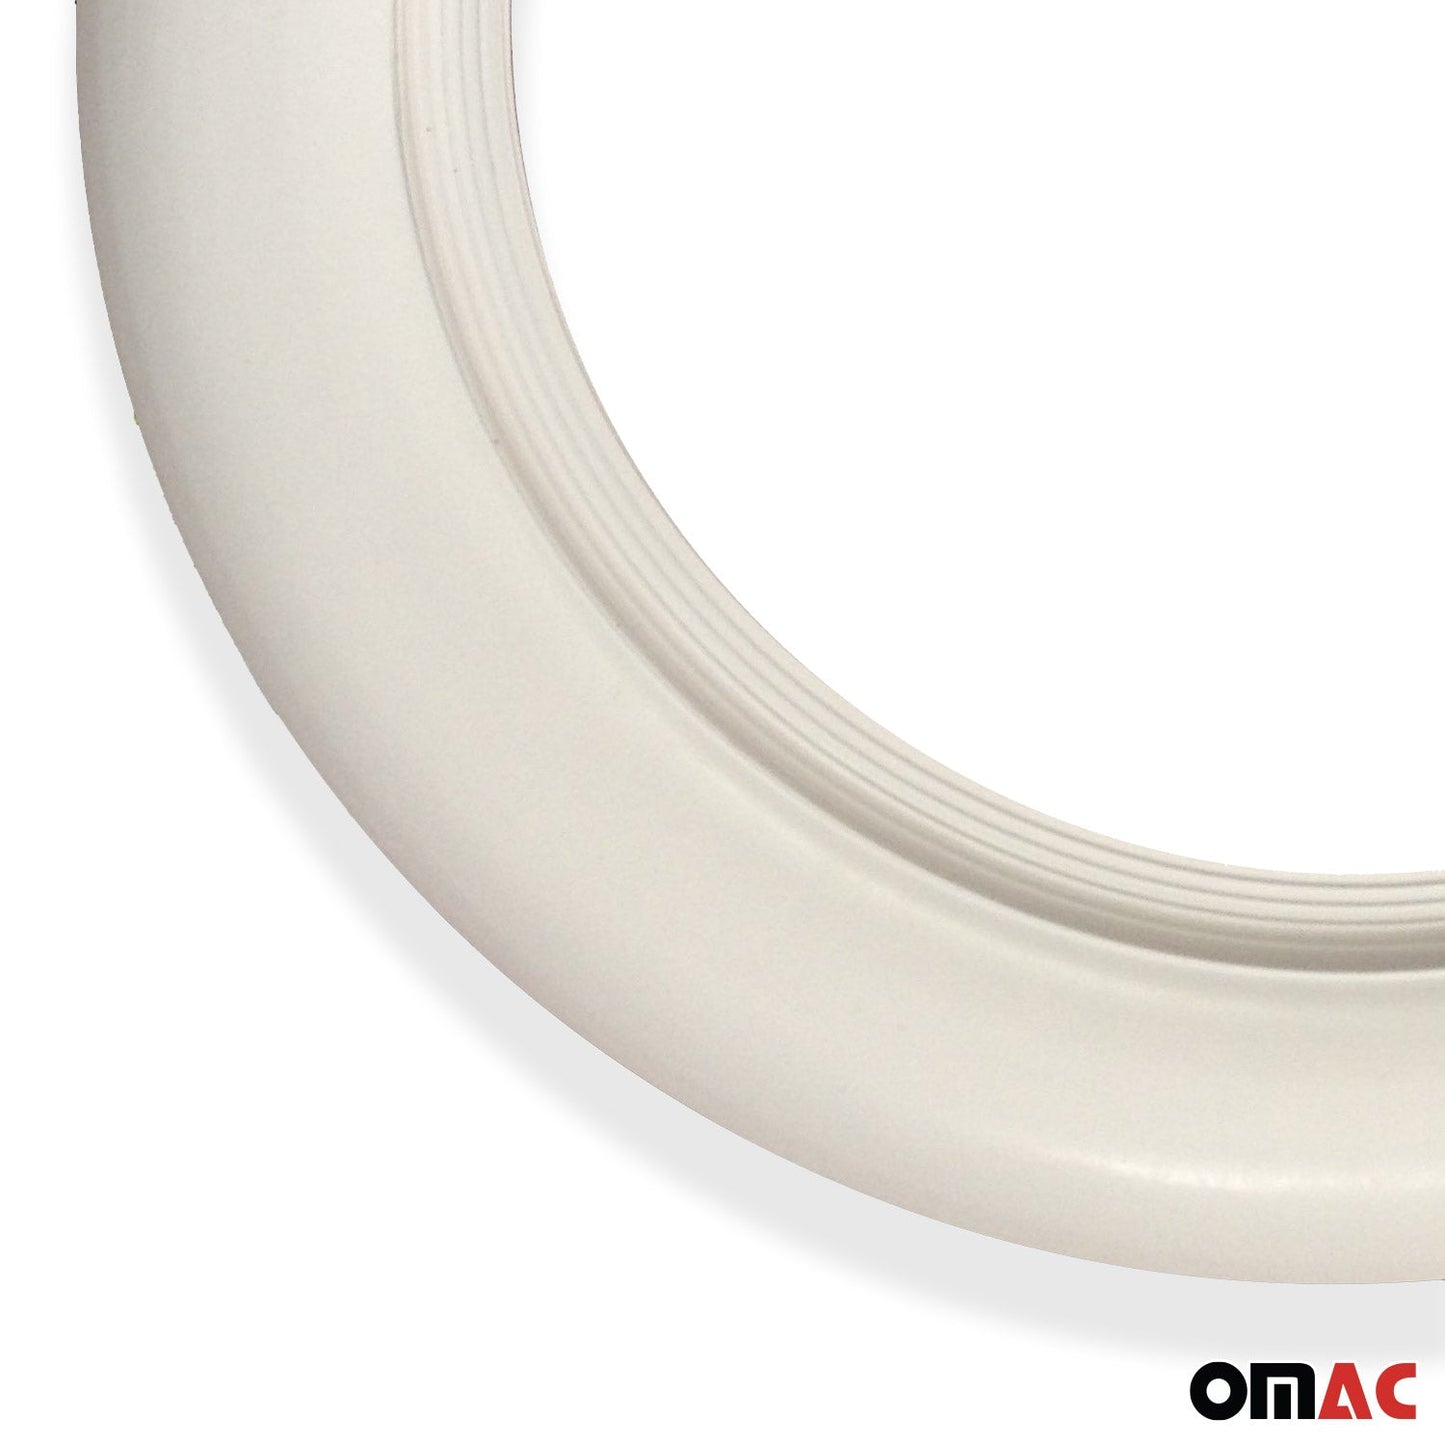 OMAC White Wall Tire Insert 14" Band Portawall Rims Sidewall Rubber Ring Set 4 Pcs 96TW014WW